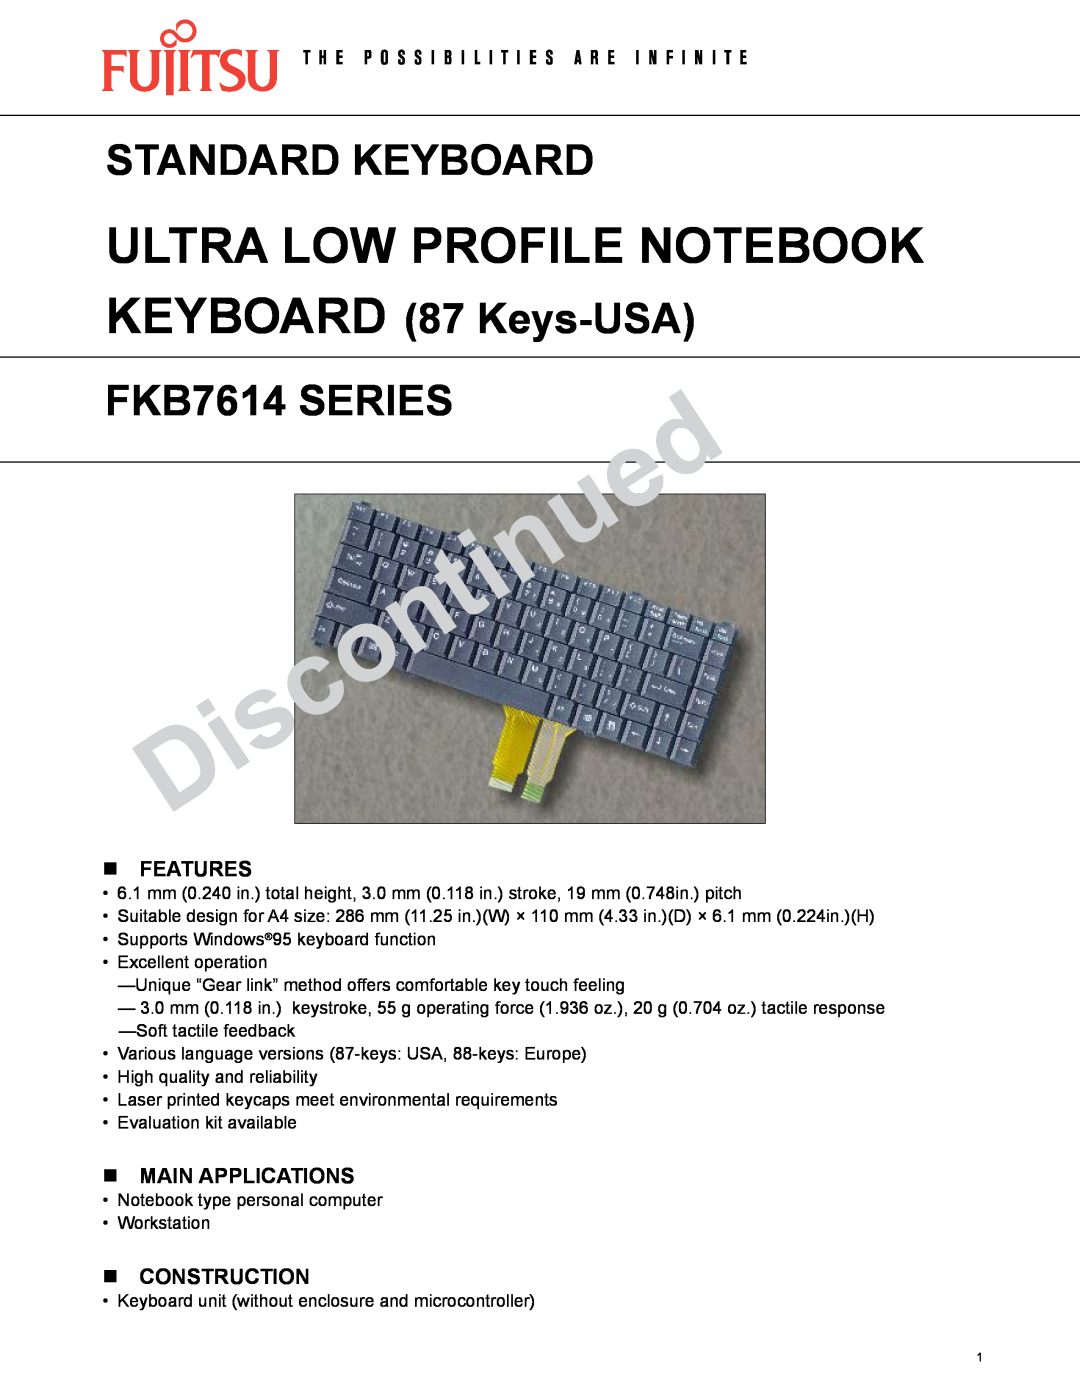 Fujitsu FKB7614 SERIES manual n FEATURES, n MAIN APPLICATIONS, n CONSTRUCTION, Ultra Low Profile Notebook 